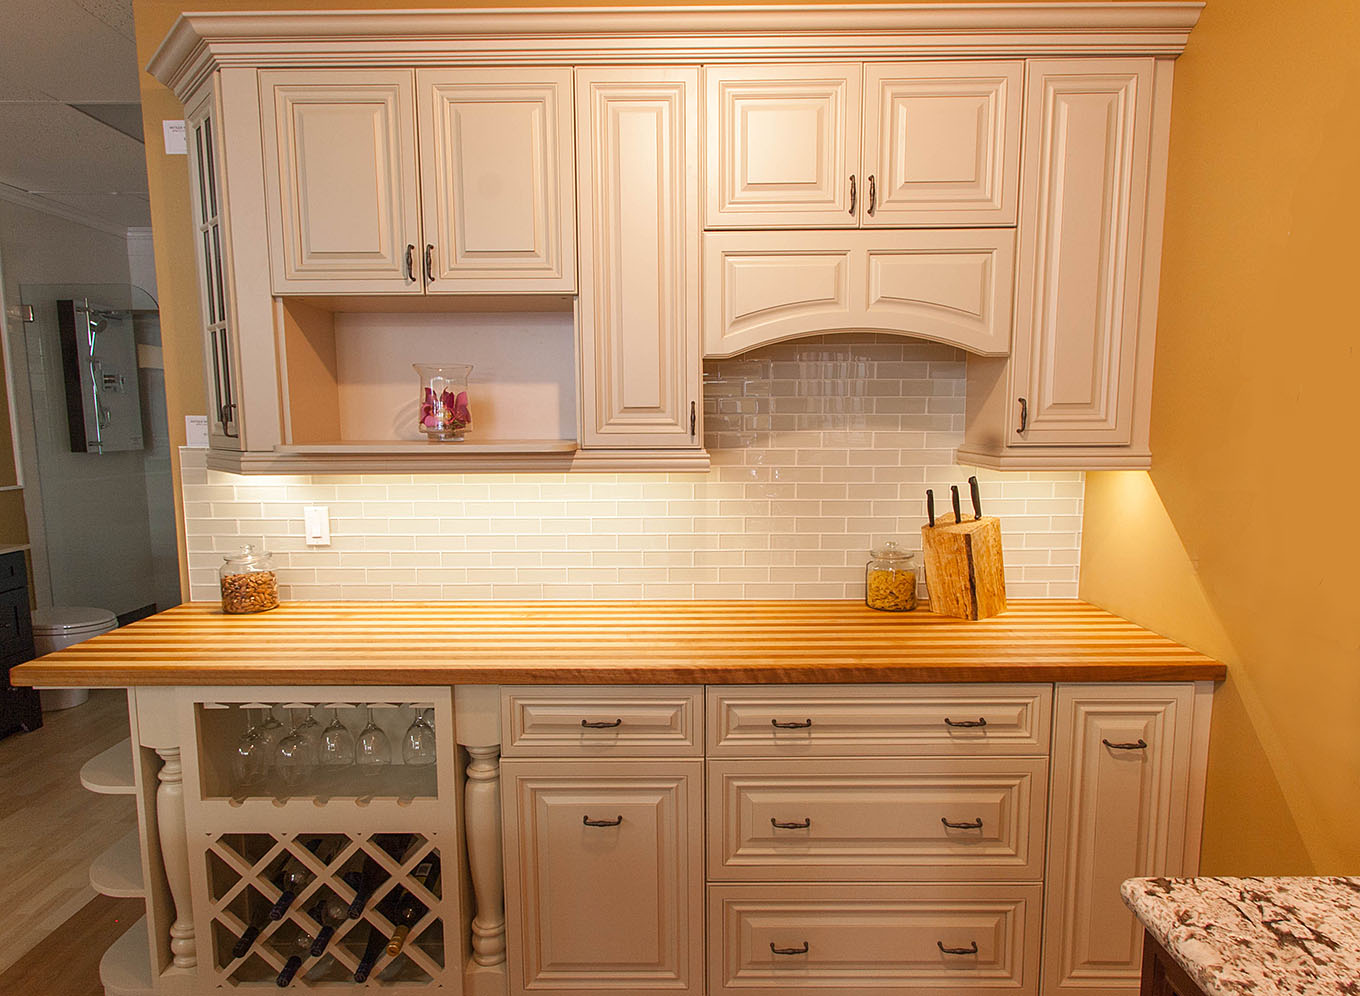 Custom Butcher Block Kitchen Countertops Kitchen Renovations Design Ideas - Your Home Renovation Experts